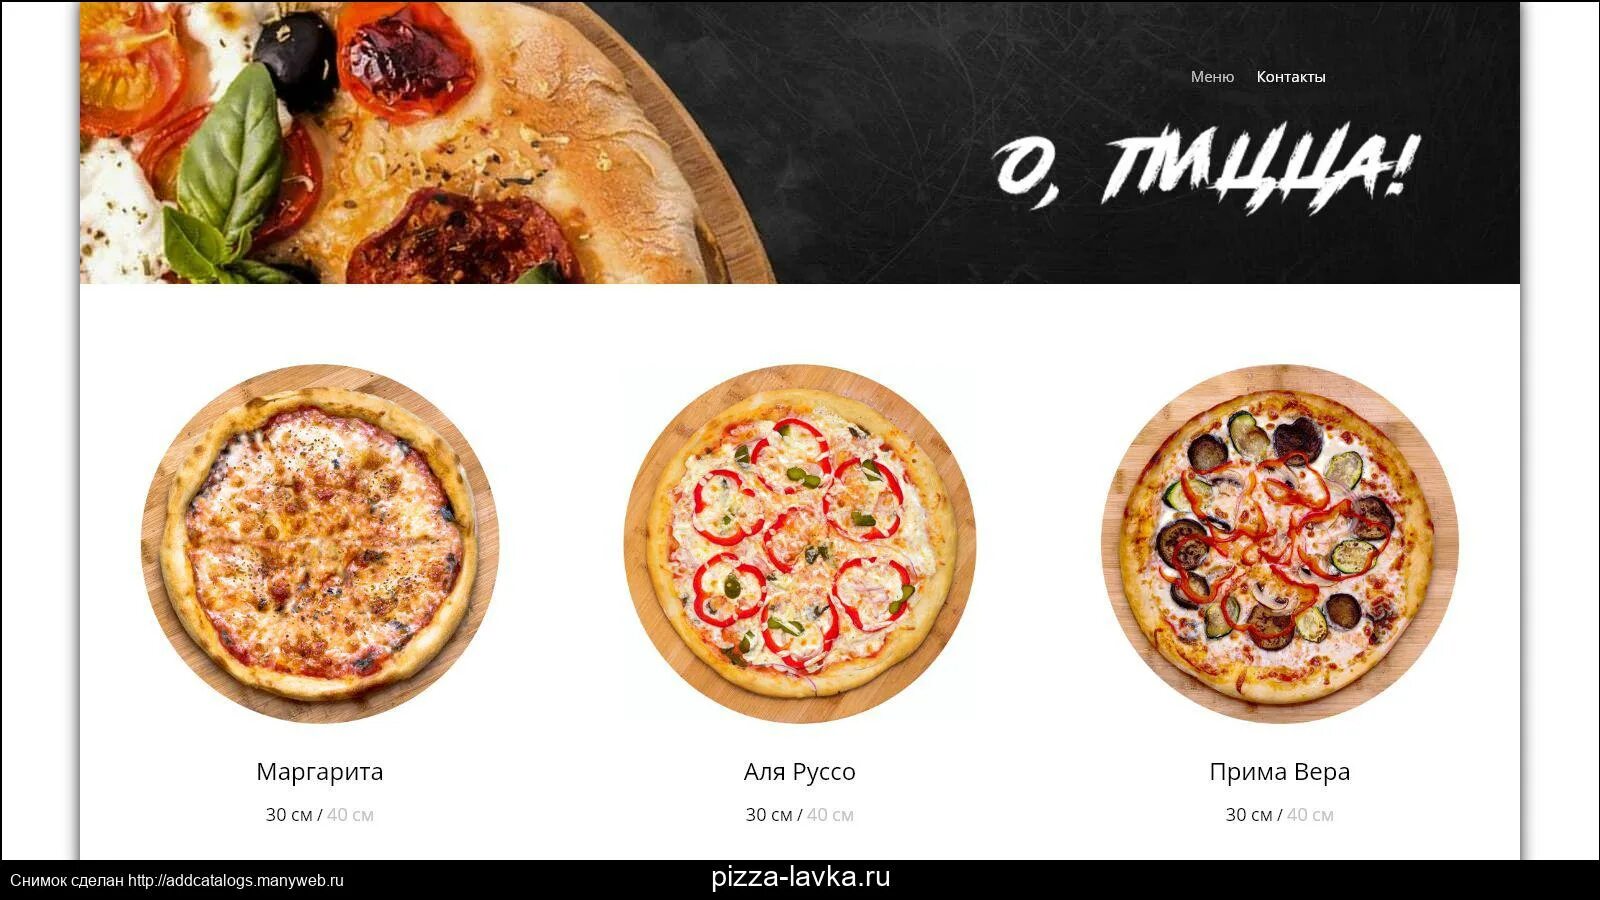 Меню ресторана пицца. Меню пицца. Меню пиццерии. Pizza меню. Пицца в ассортименте картинки.